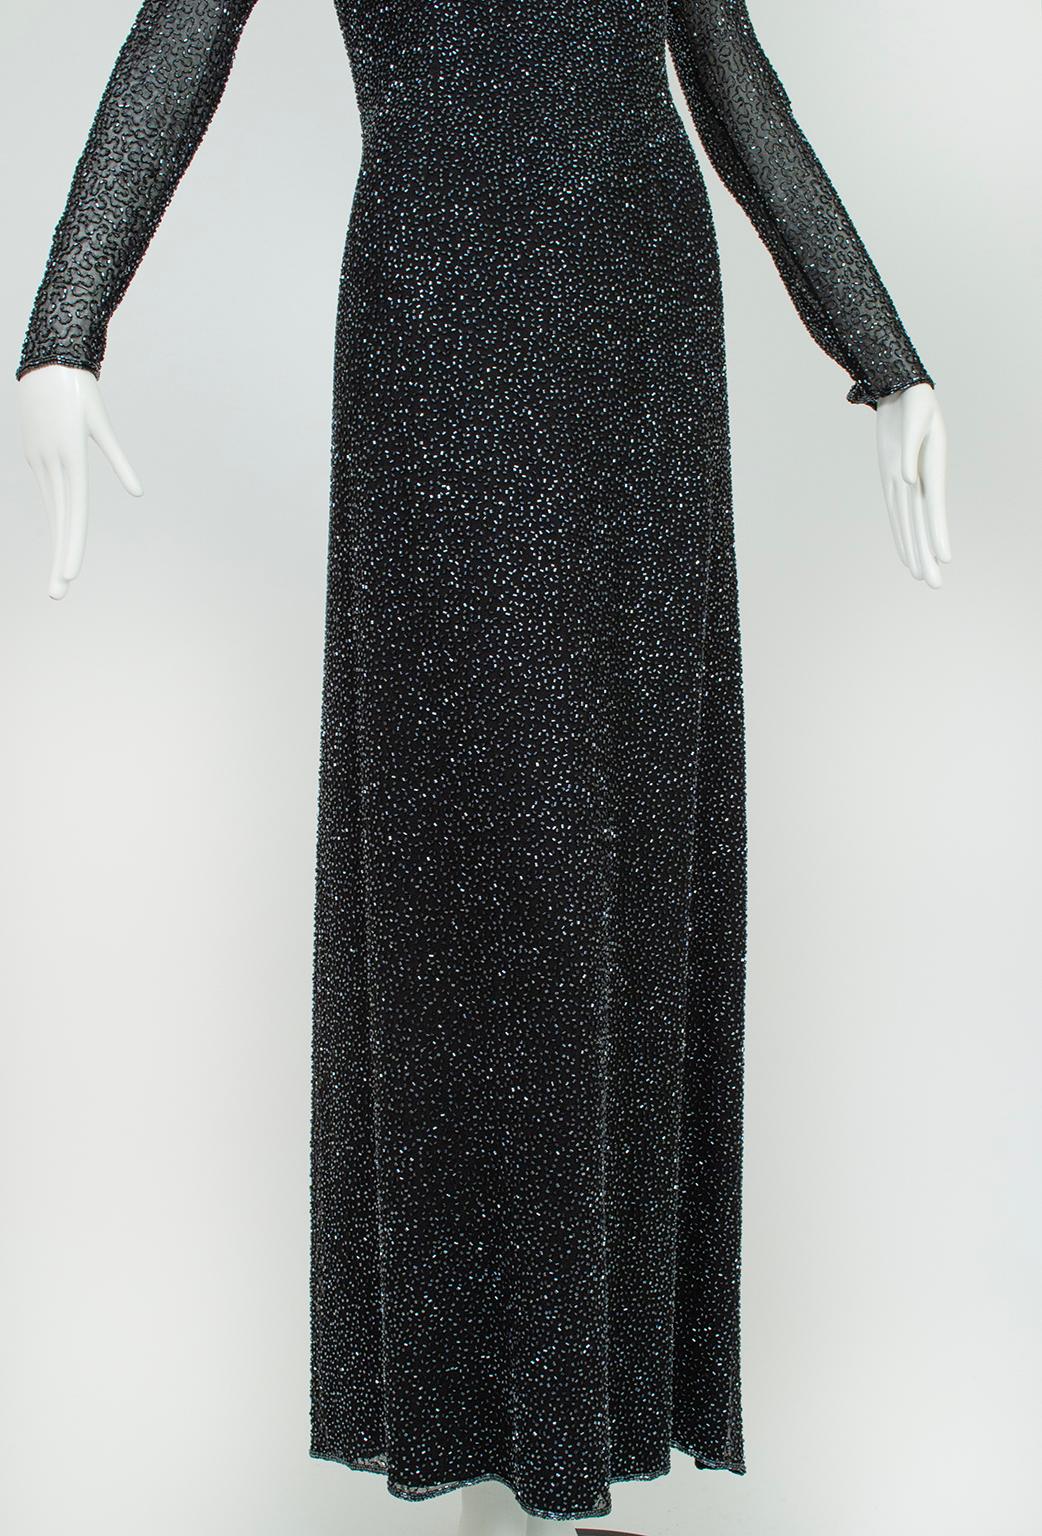 Lillie Rubin Black Full Length Beaded Column Gown w Illusion Sleeves – L, 21st C For Sale 5